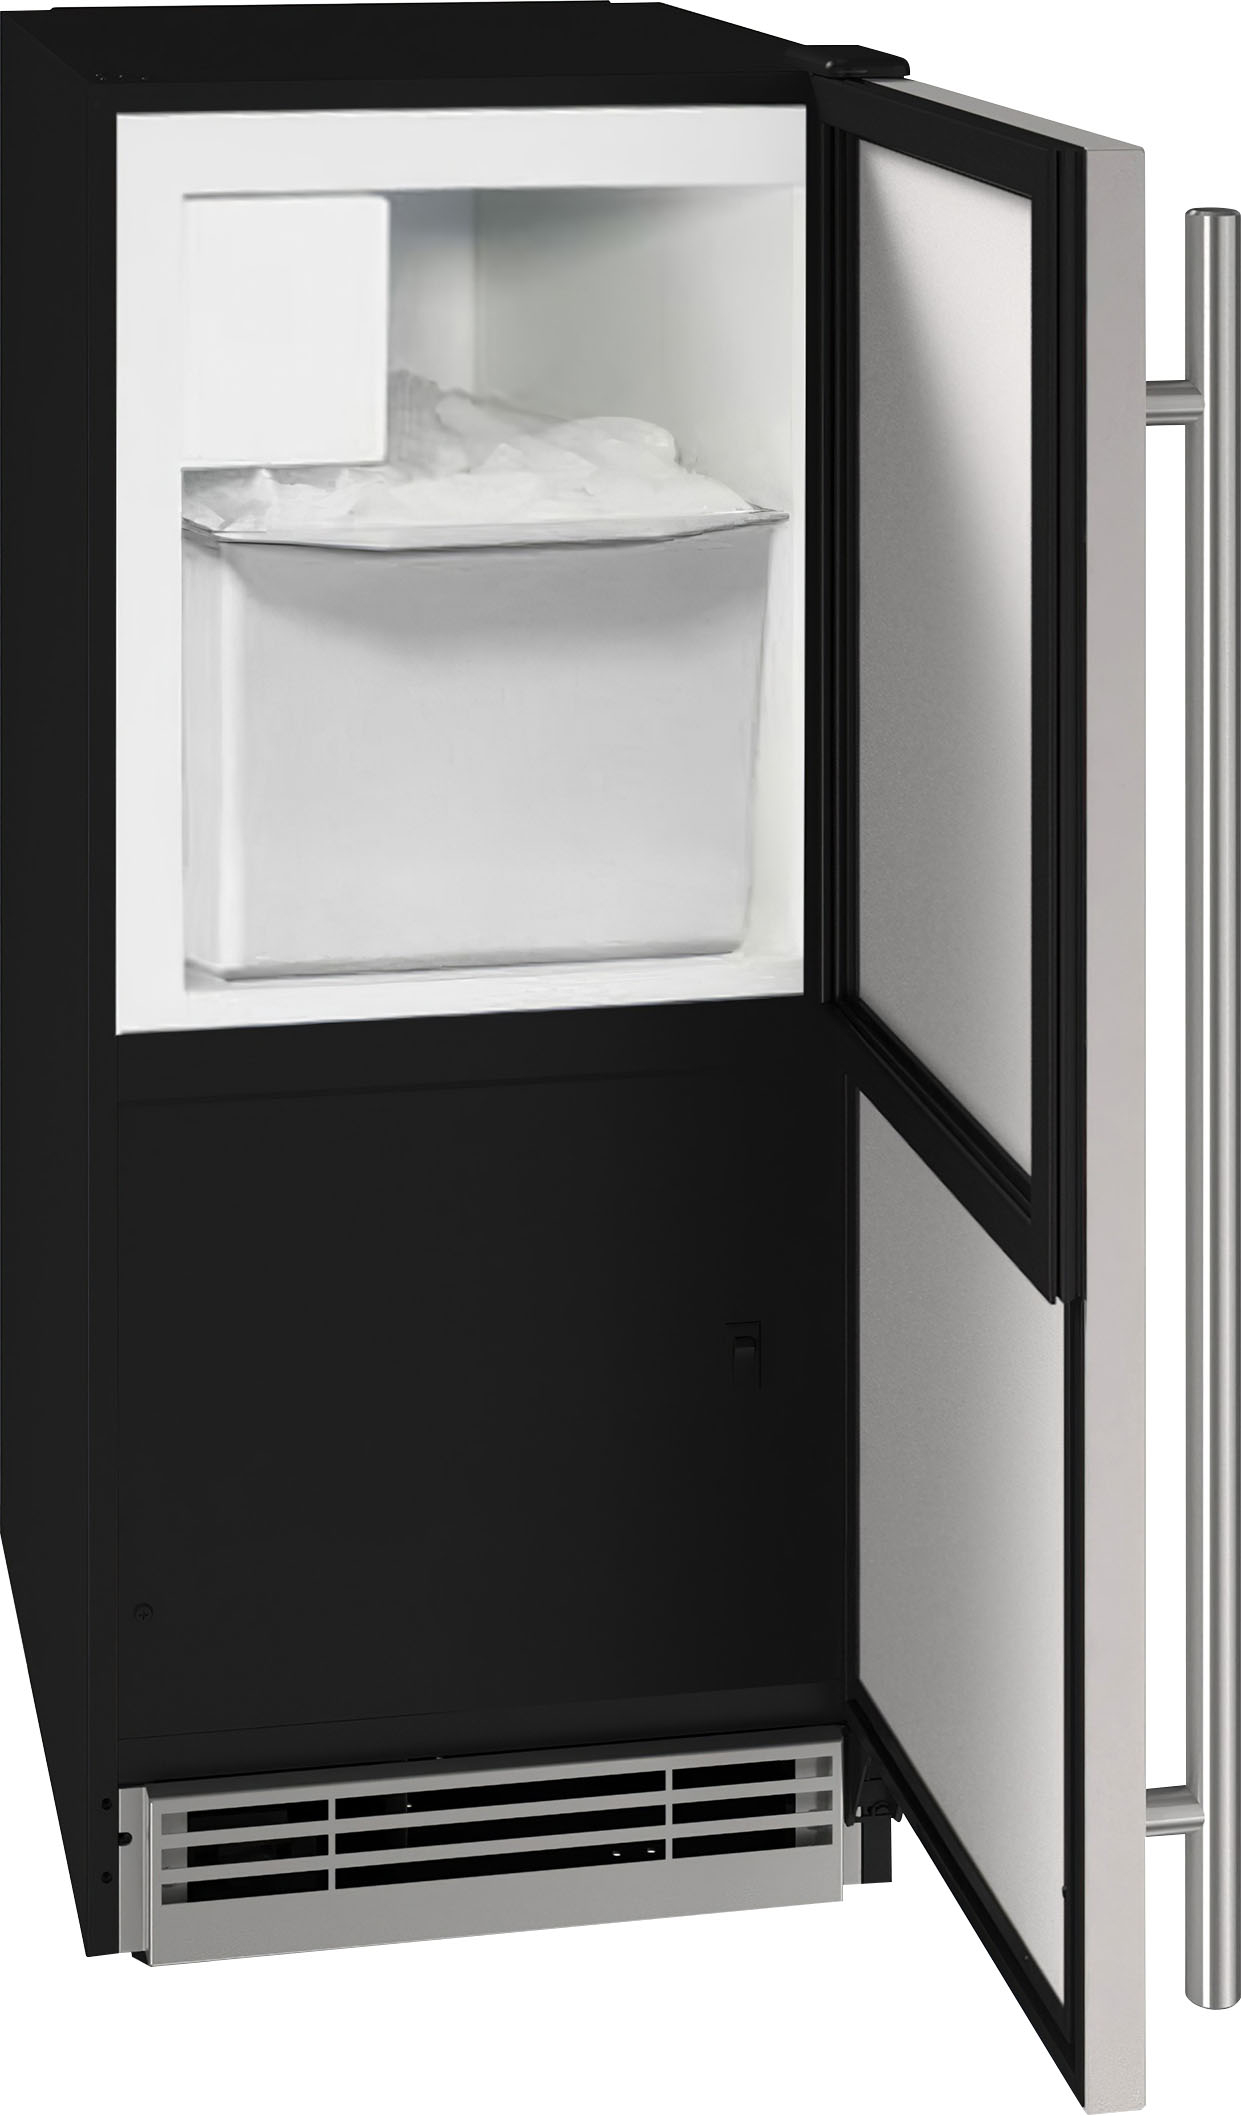 U-Line Ice Makers Refrigeration Appliances - U-BI1215-LQ